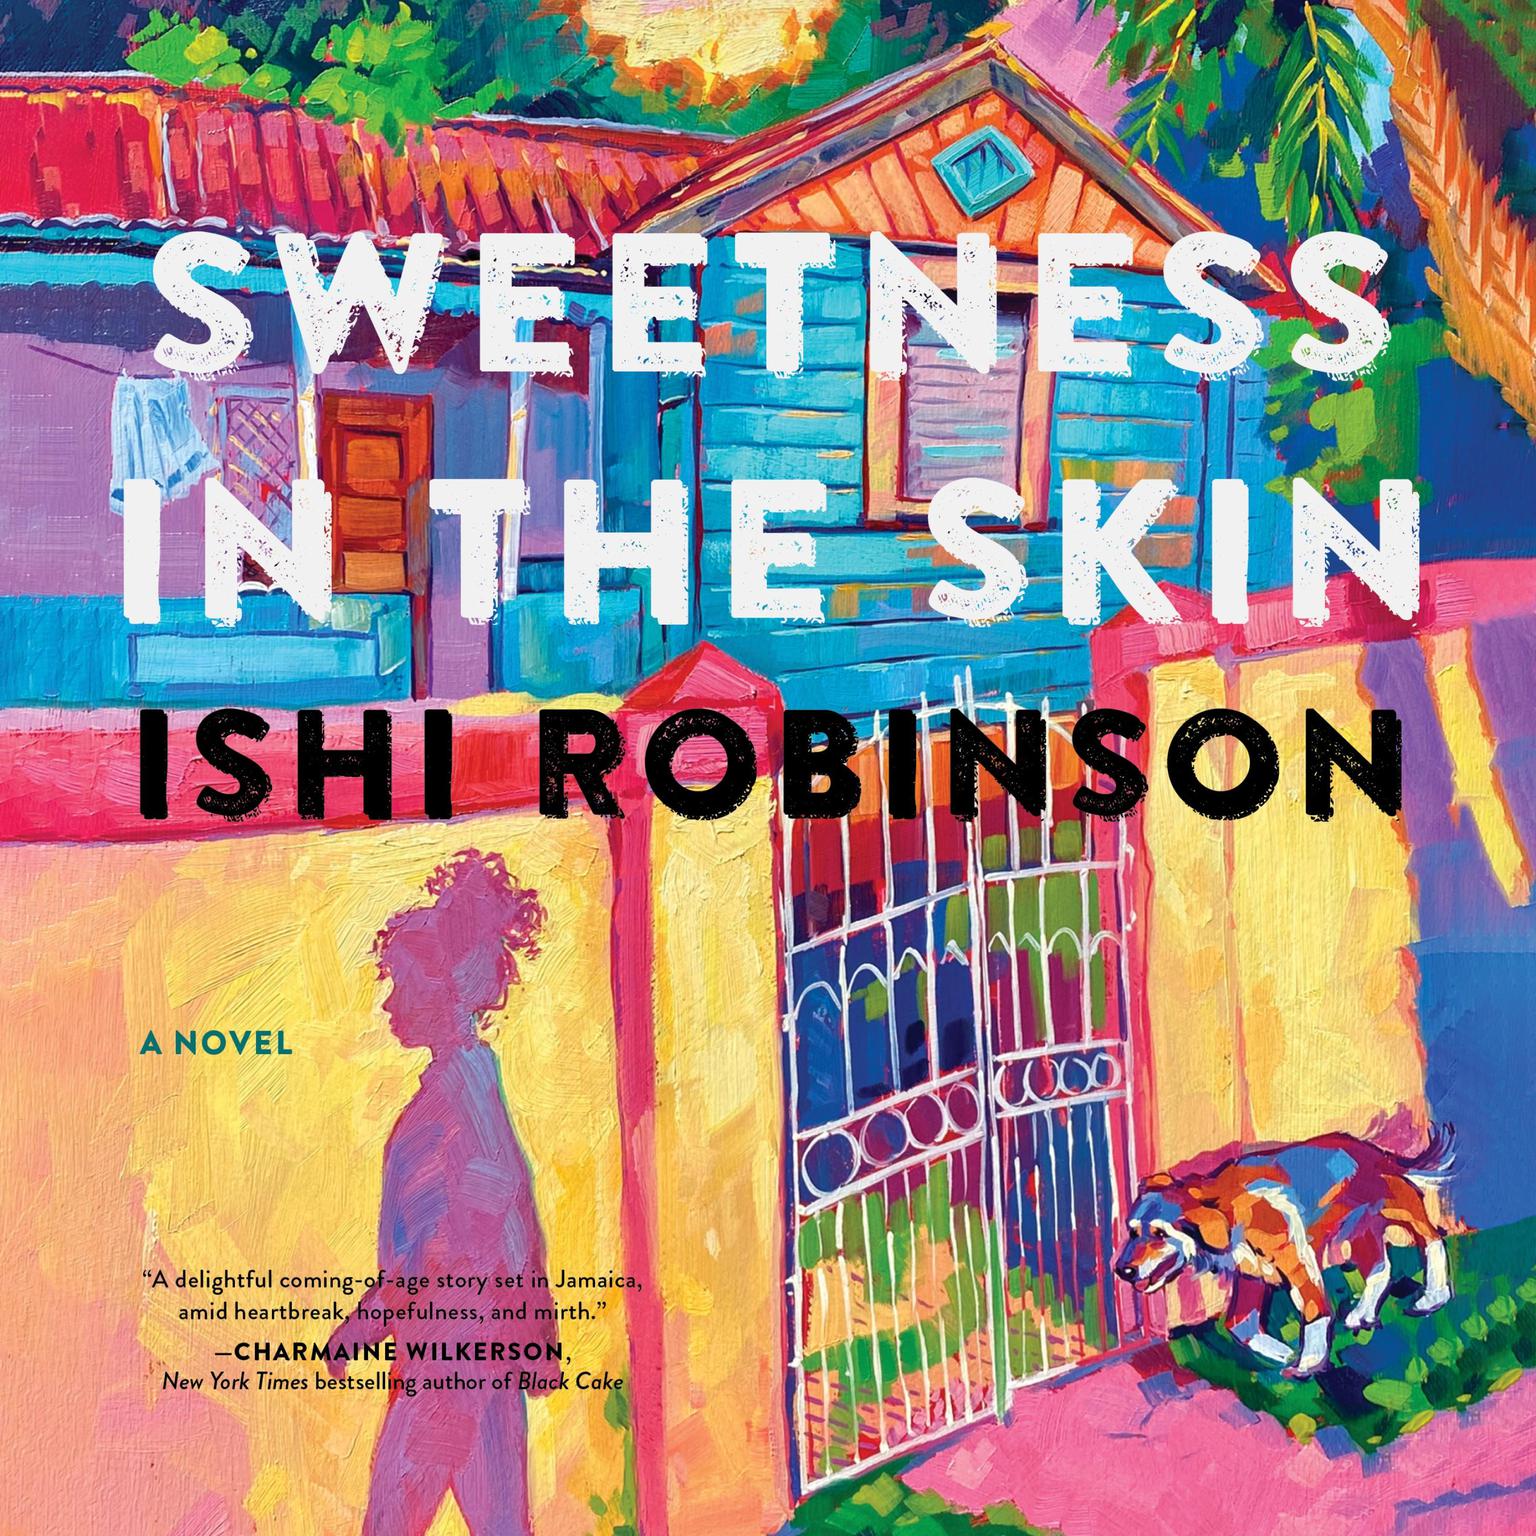 Sweetness in the Skin: A Novel Audiobook, by Ishi Robinson